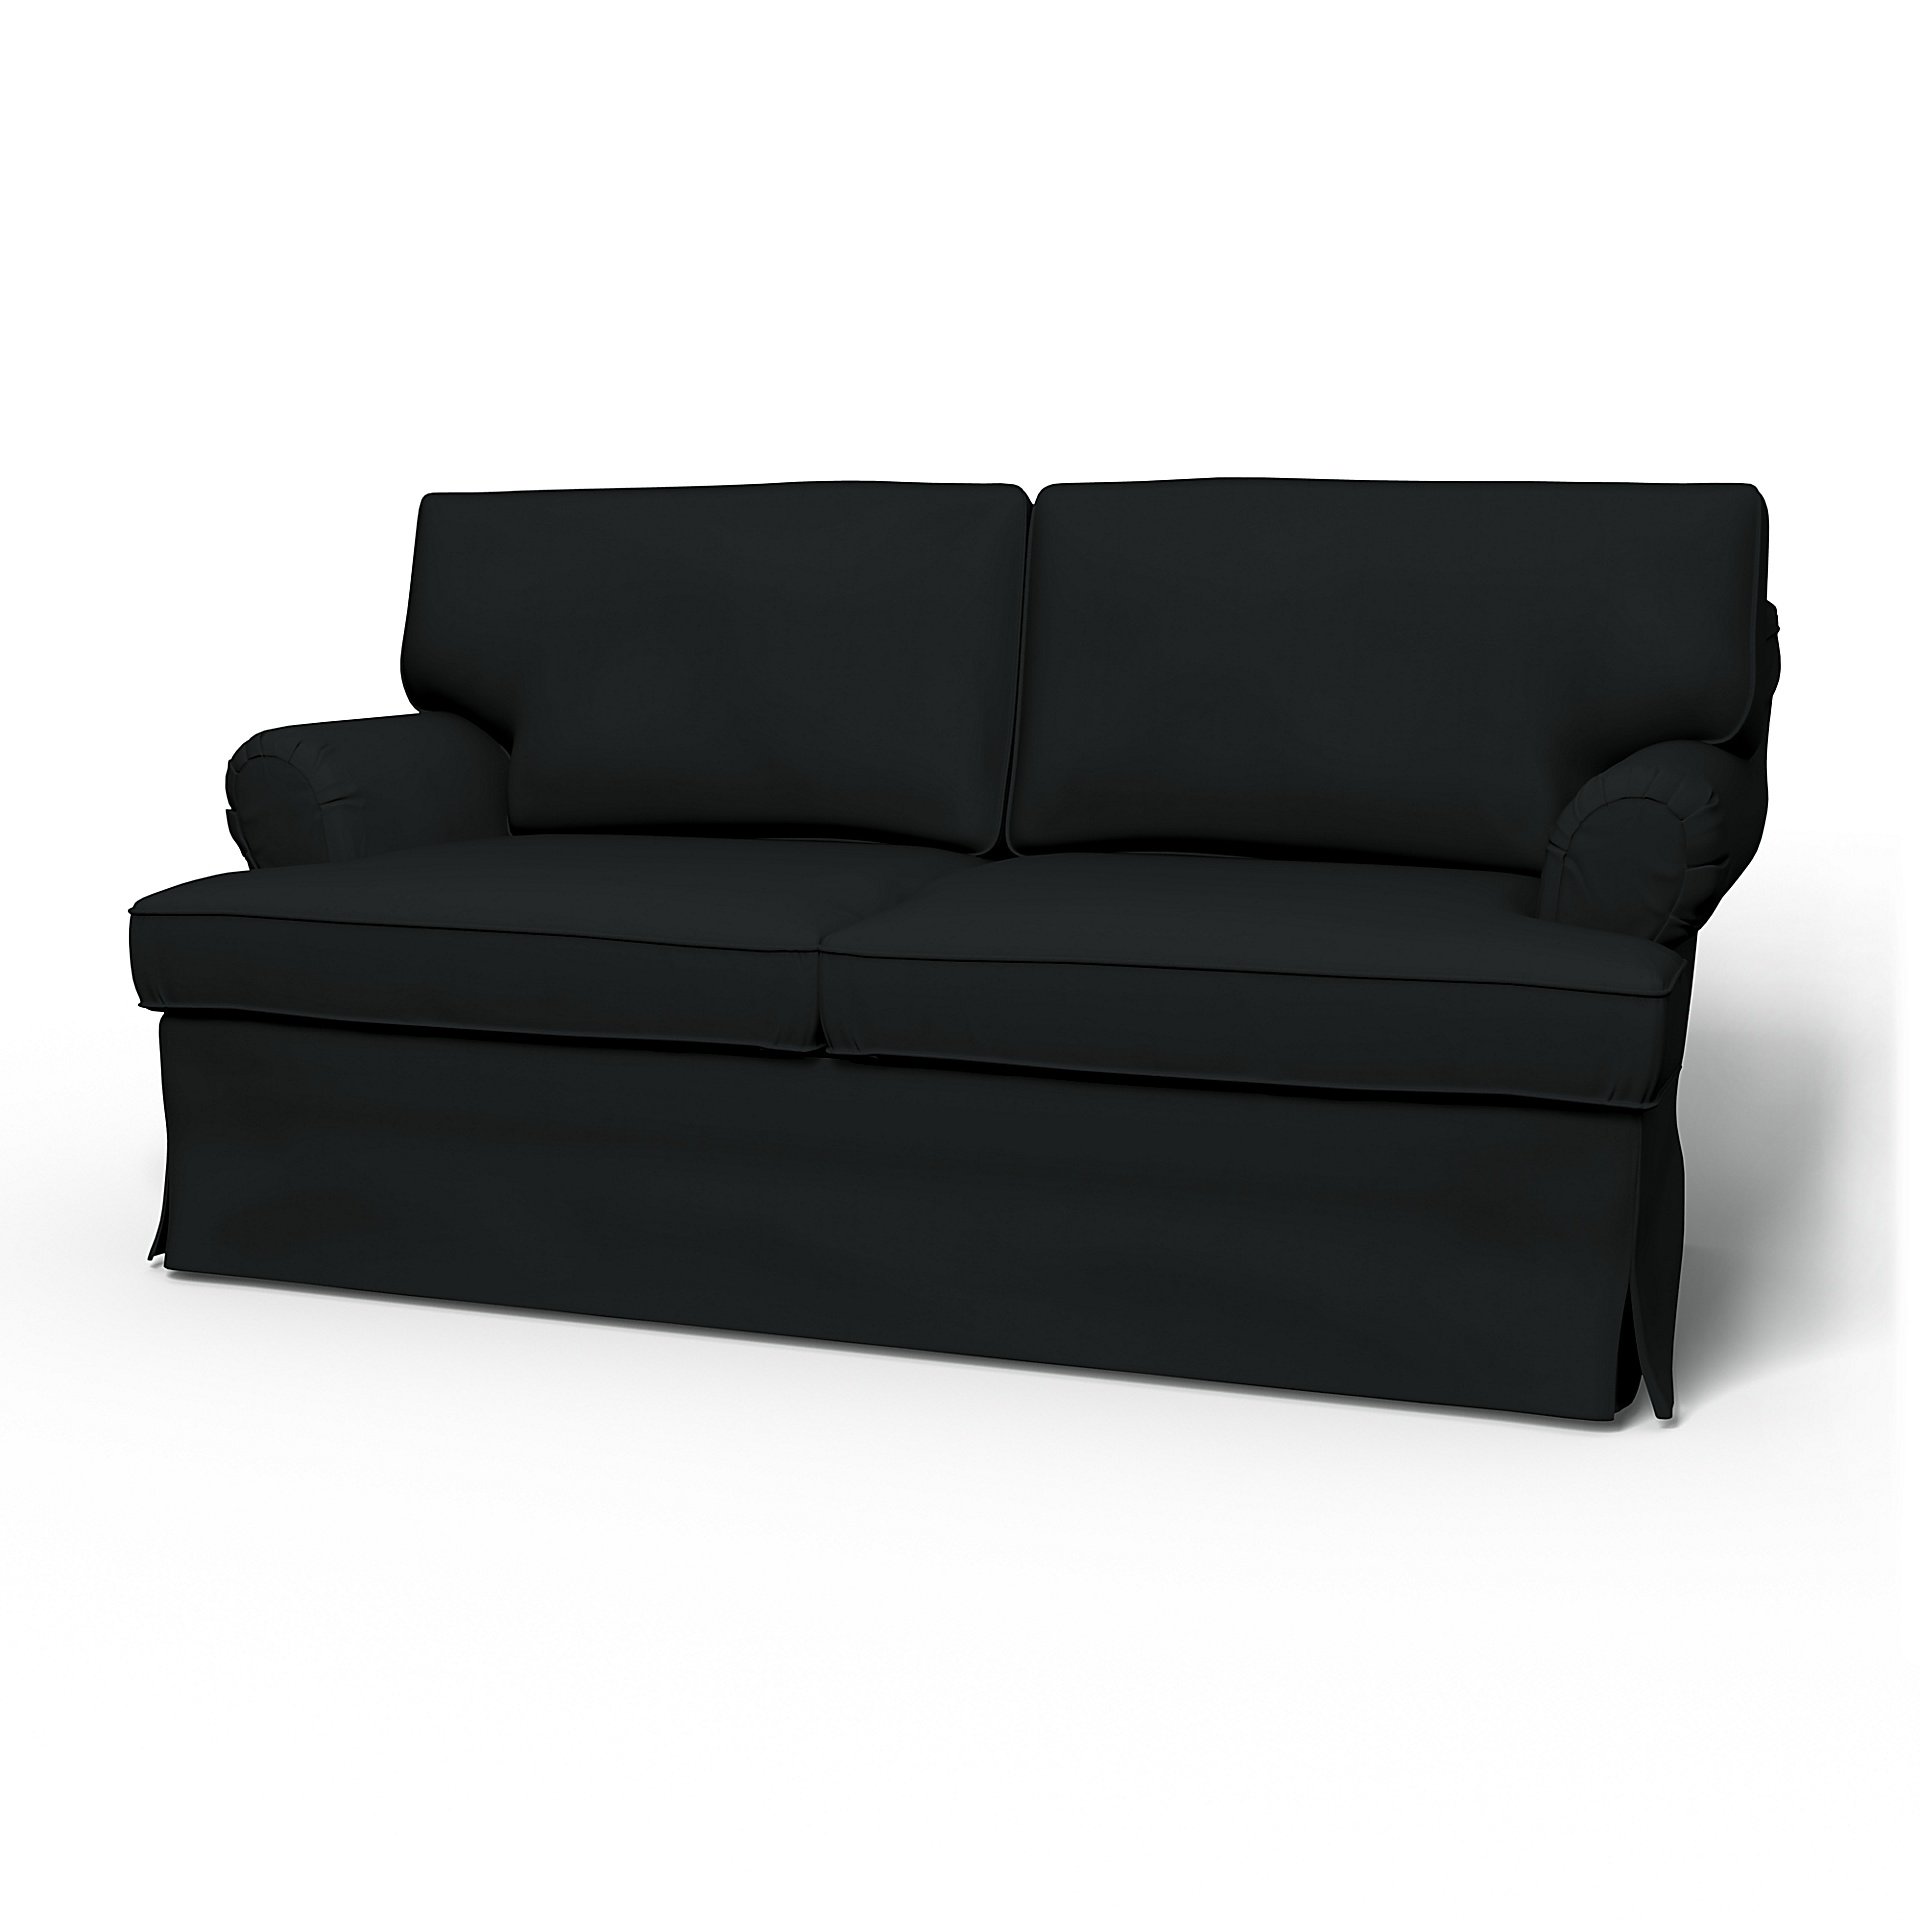 IKEA - Stockholm 2 Seater Sofa Cover (1994-2000), Jet Black, Cotton - Bemz